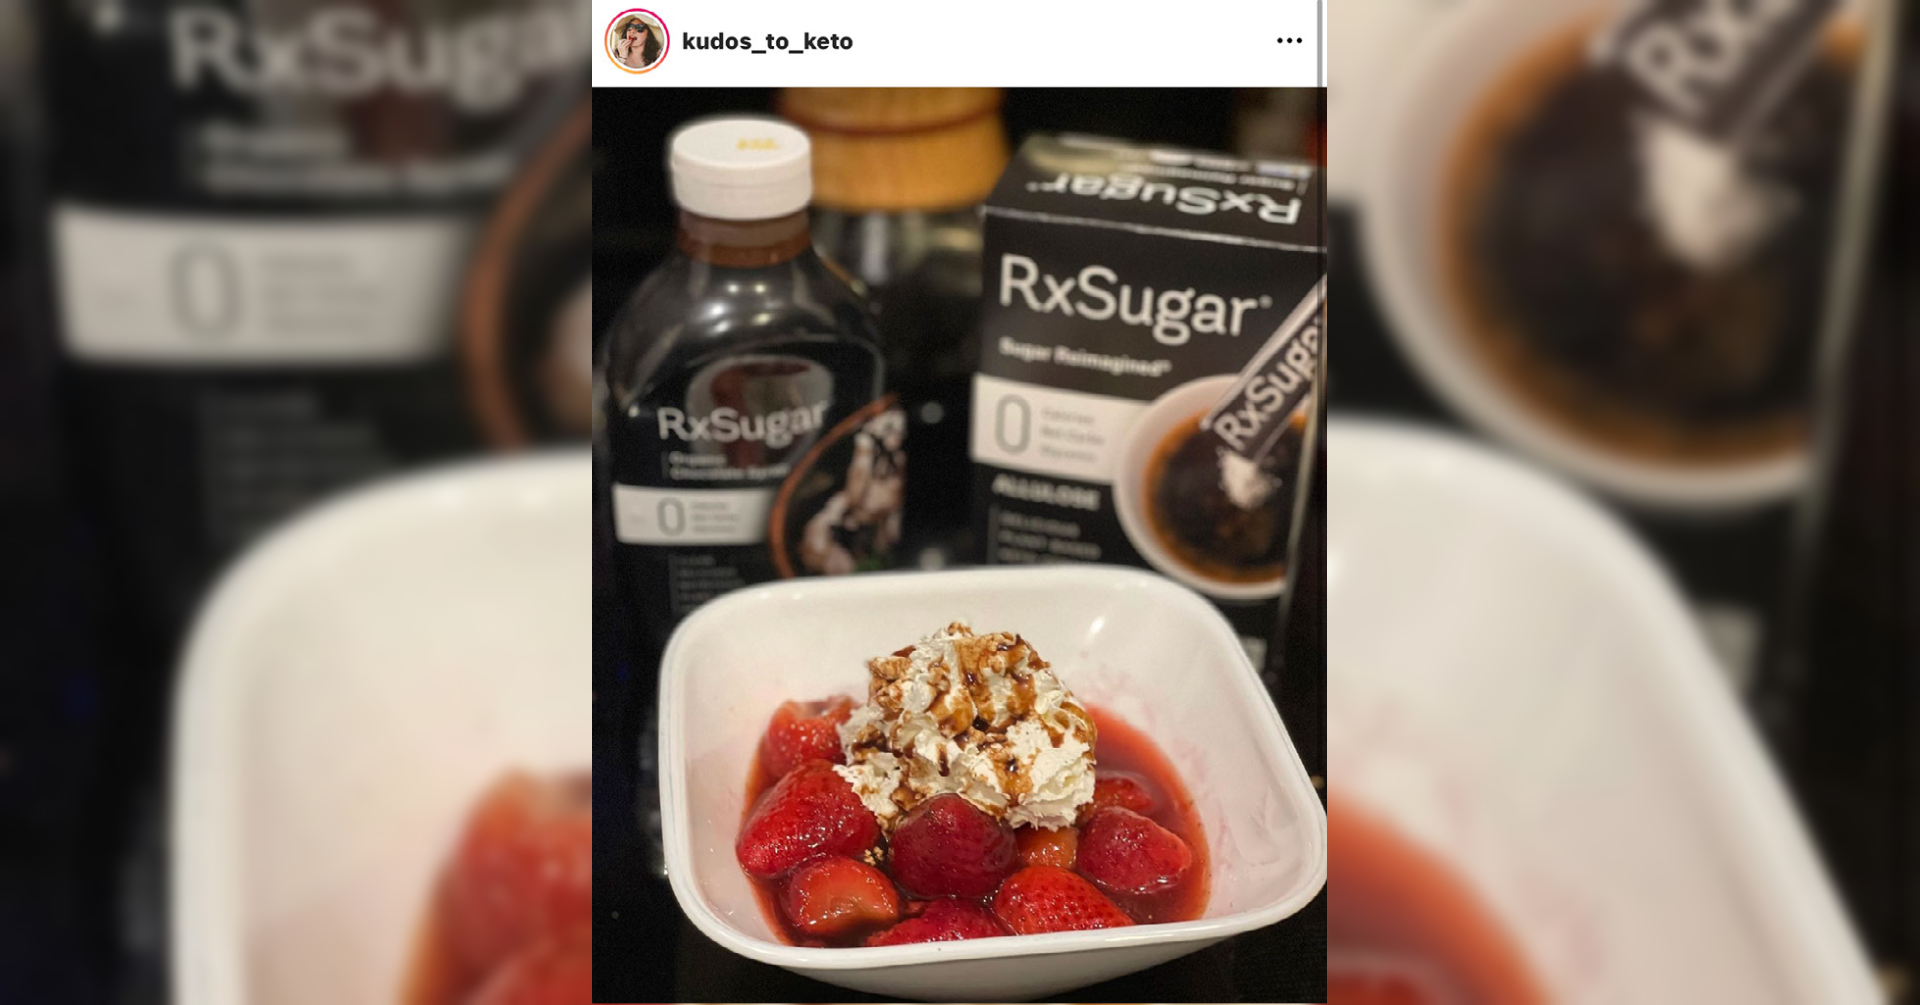 Kudos To Keto Making Her Strawberry Dessert With RxSugar Organic Chocolate Syrup